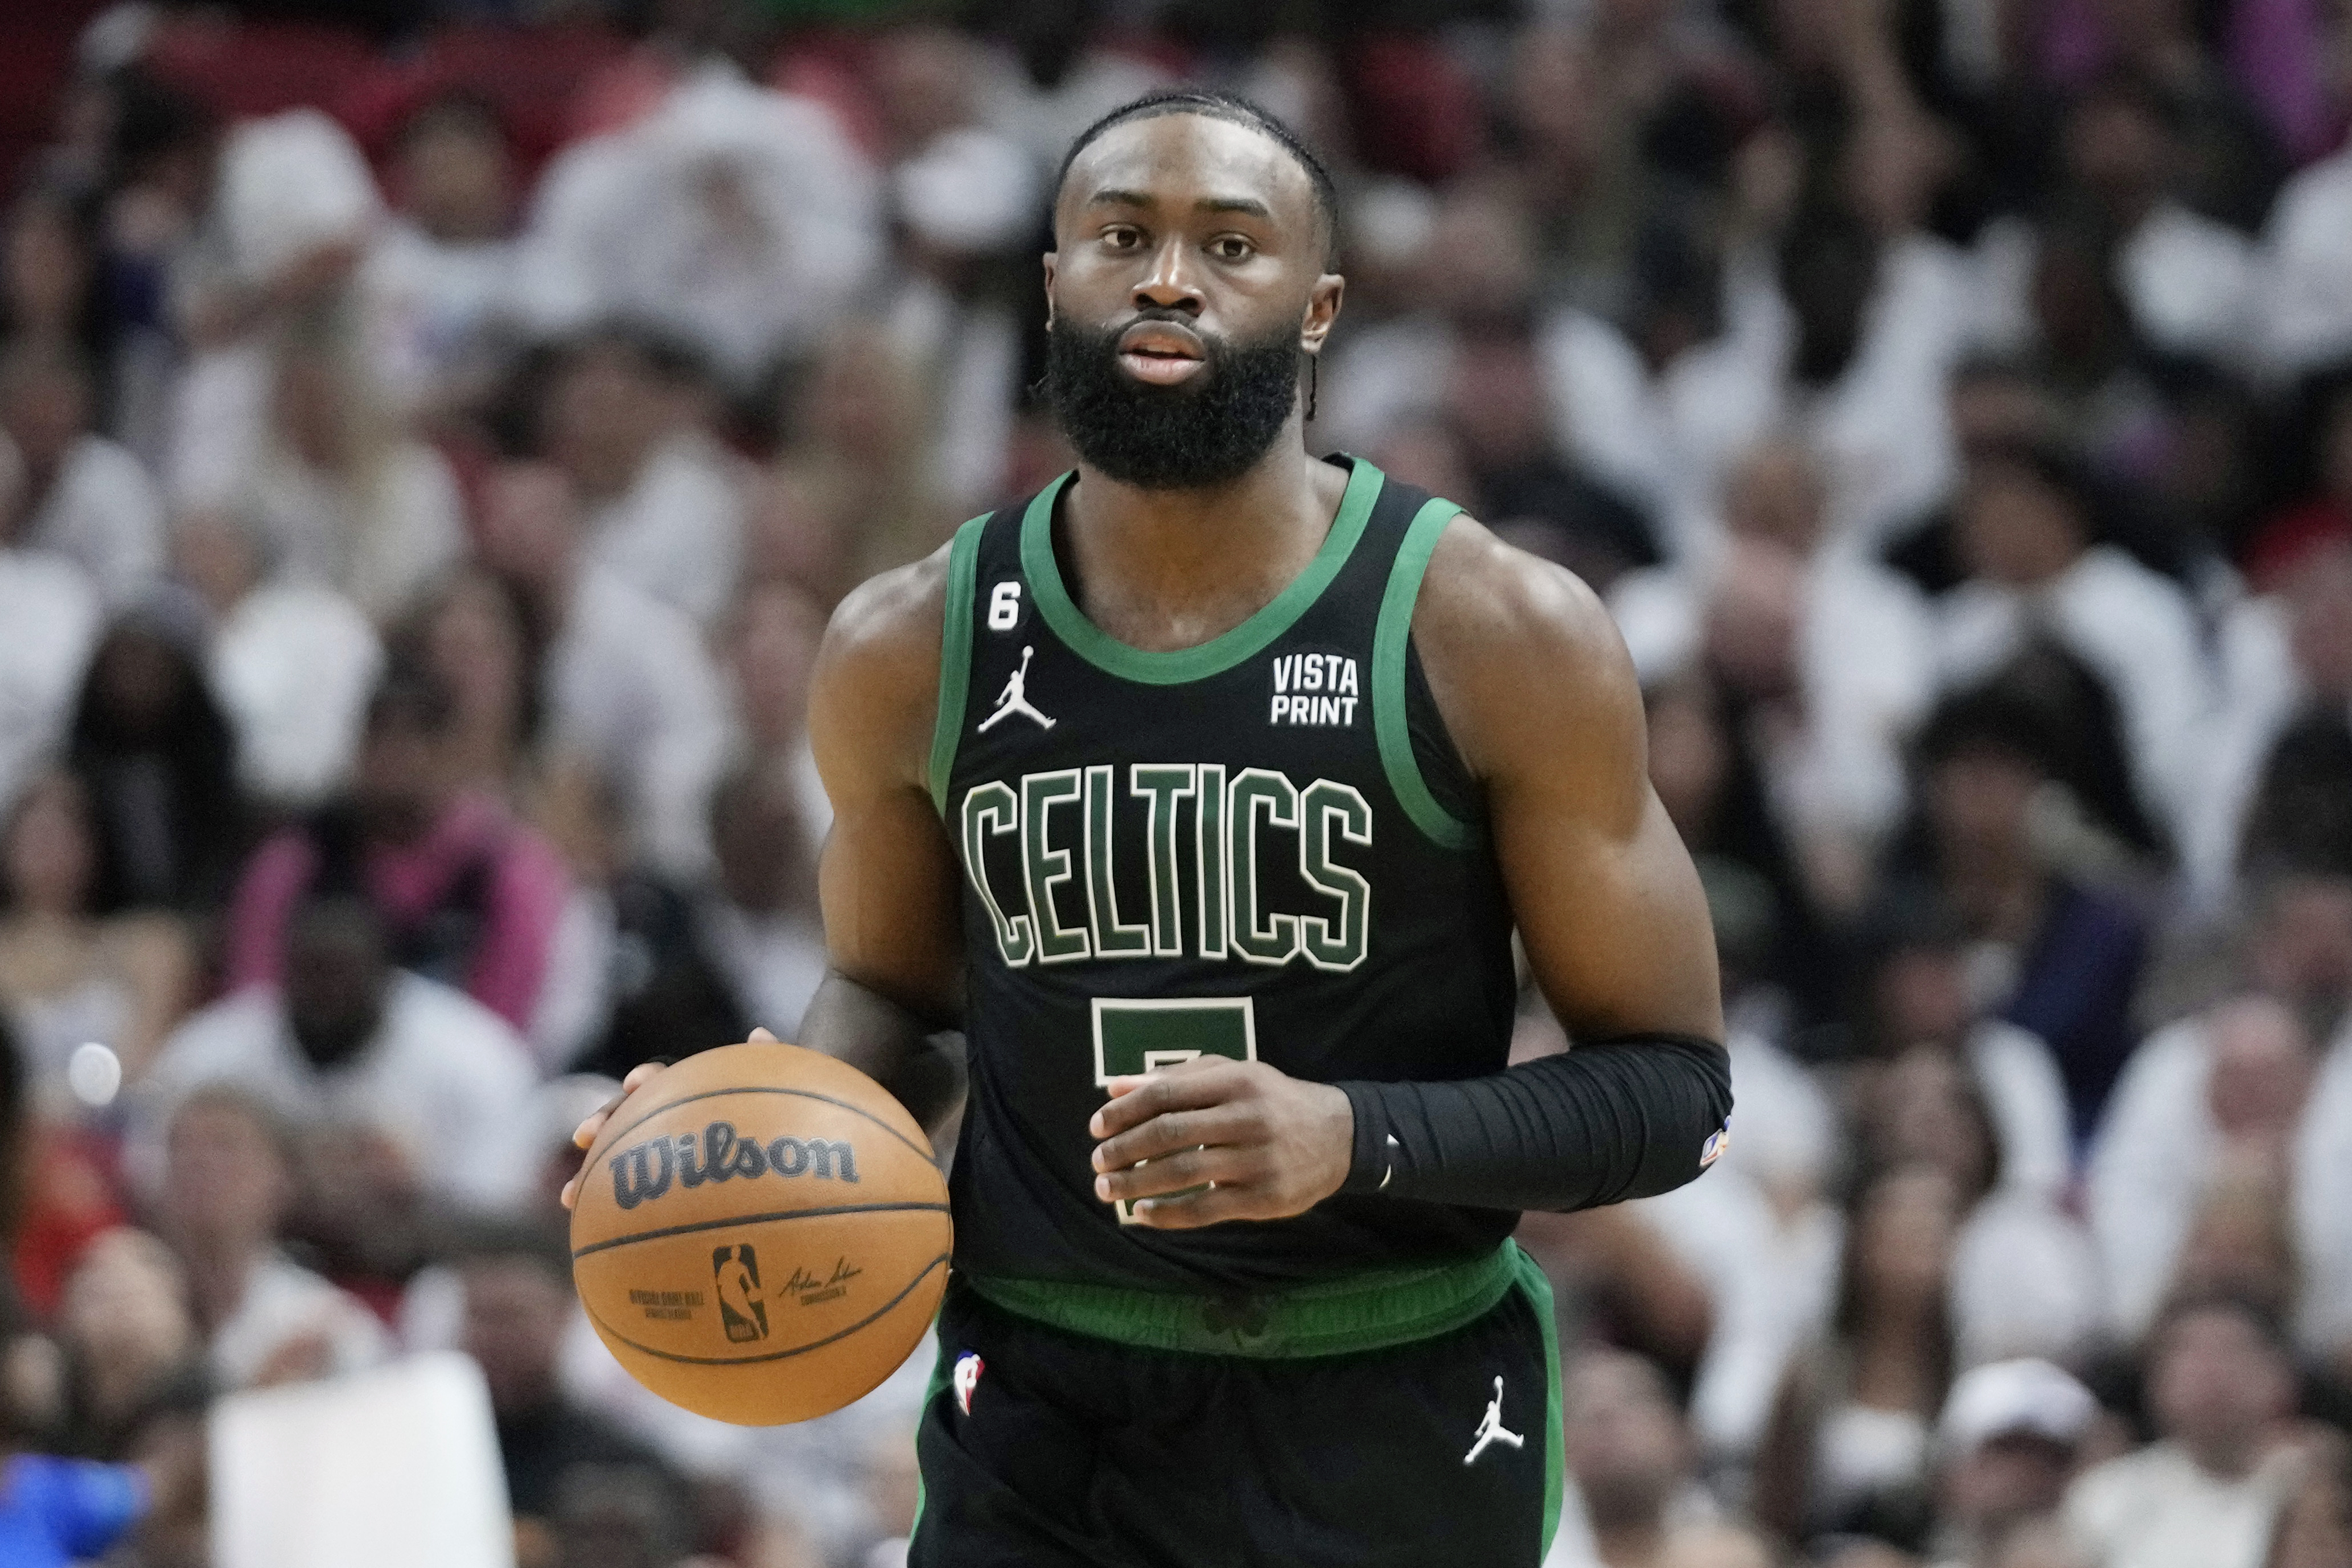 NBA Scout, Coach Detail Where Boston Celtics' Jaylen Brown Can Improve